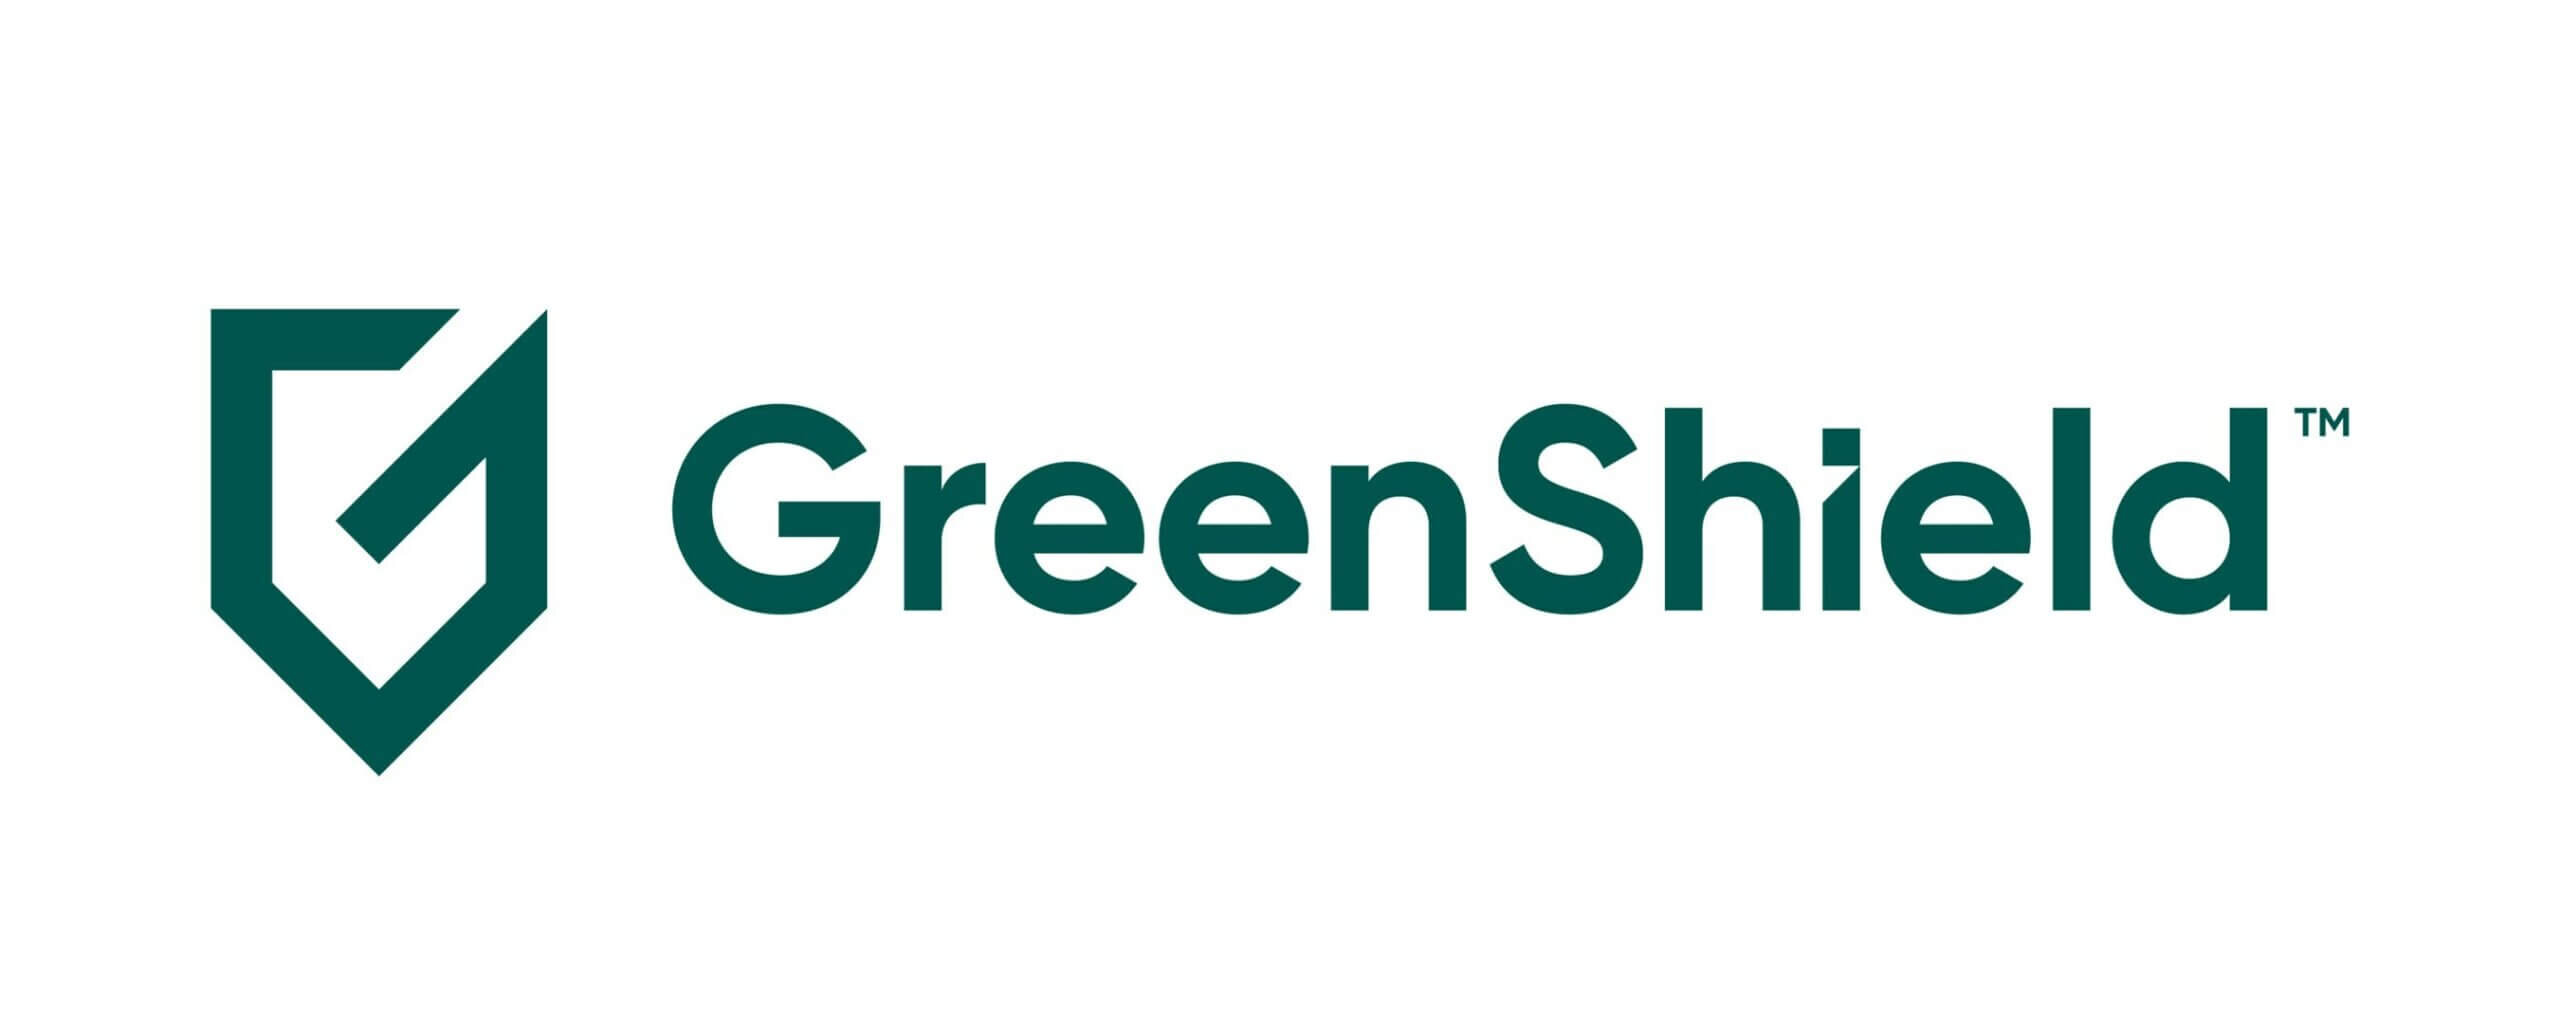 Greenshield Insurance logo